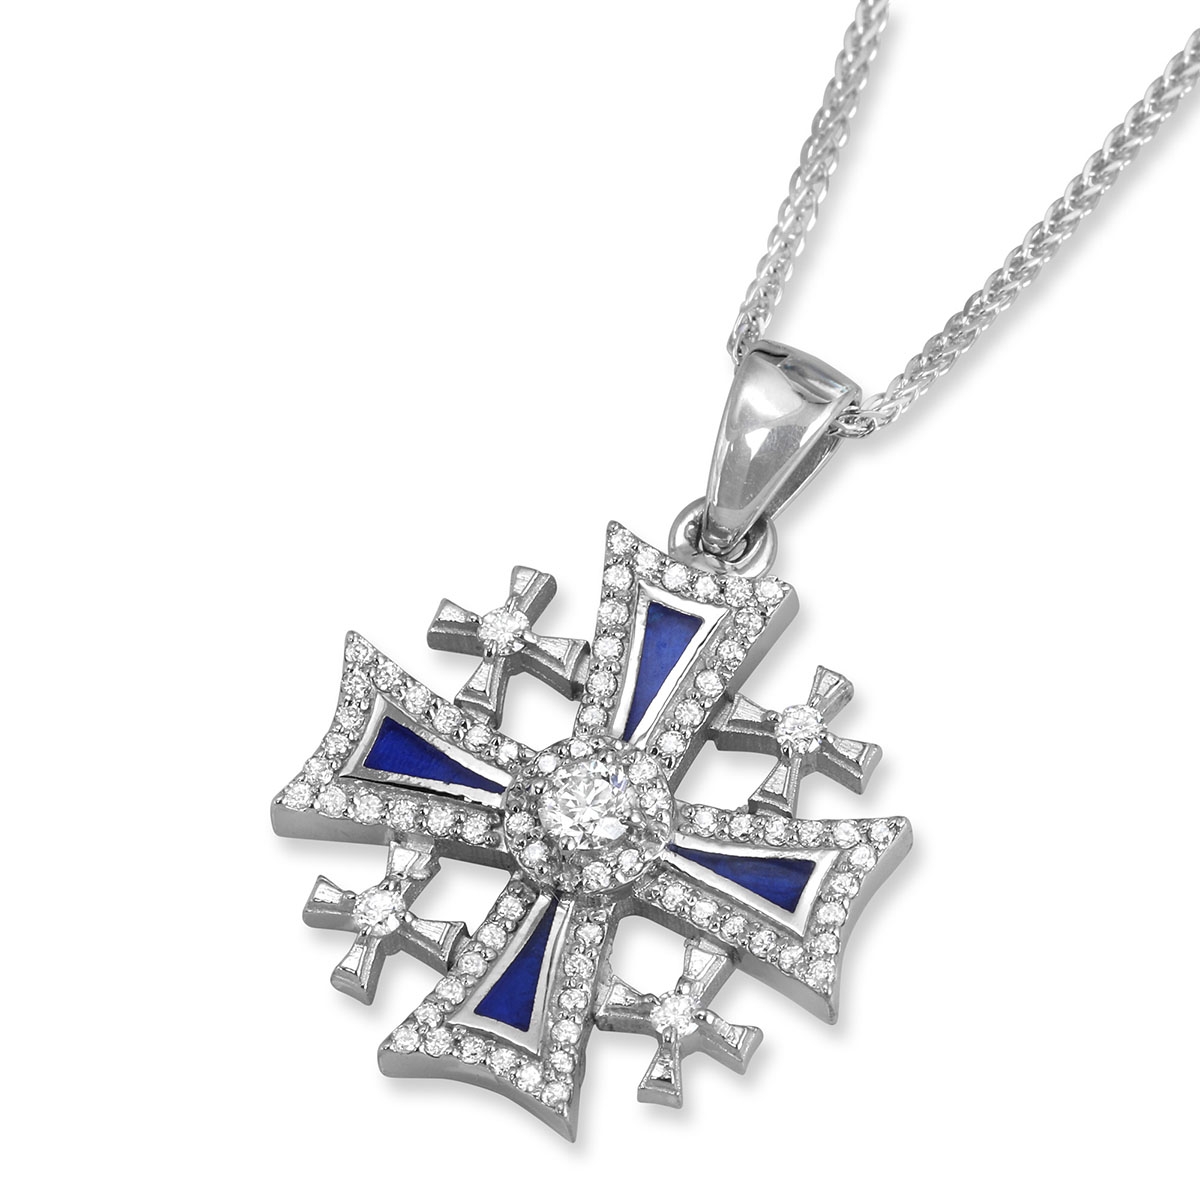 Anbinder Deluxe 14K White Gold Diamond-Studded Jerusalem Cross Pendant with Blue Enamel Accents and Diamond Border - 1